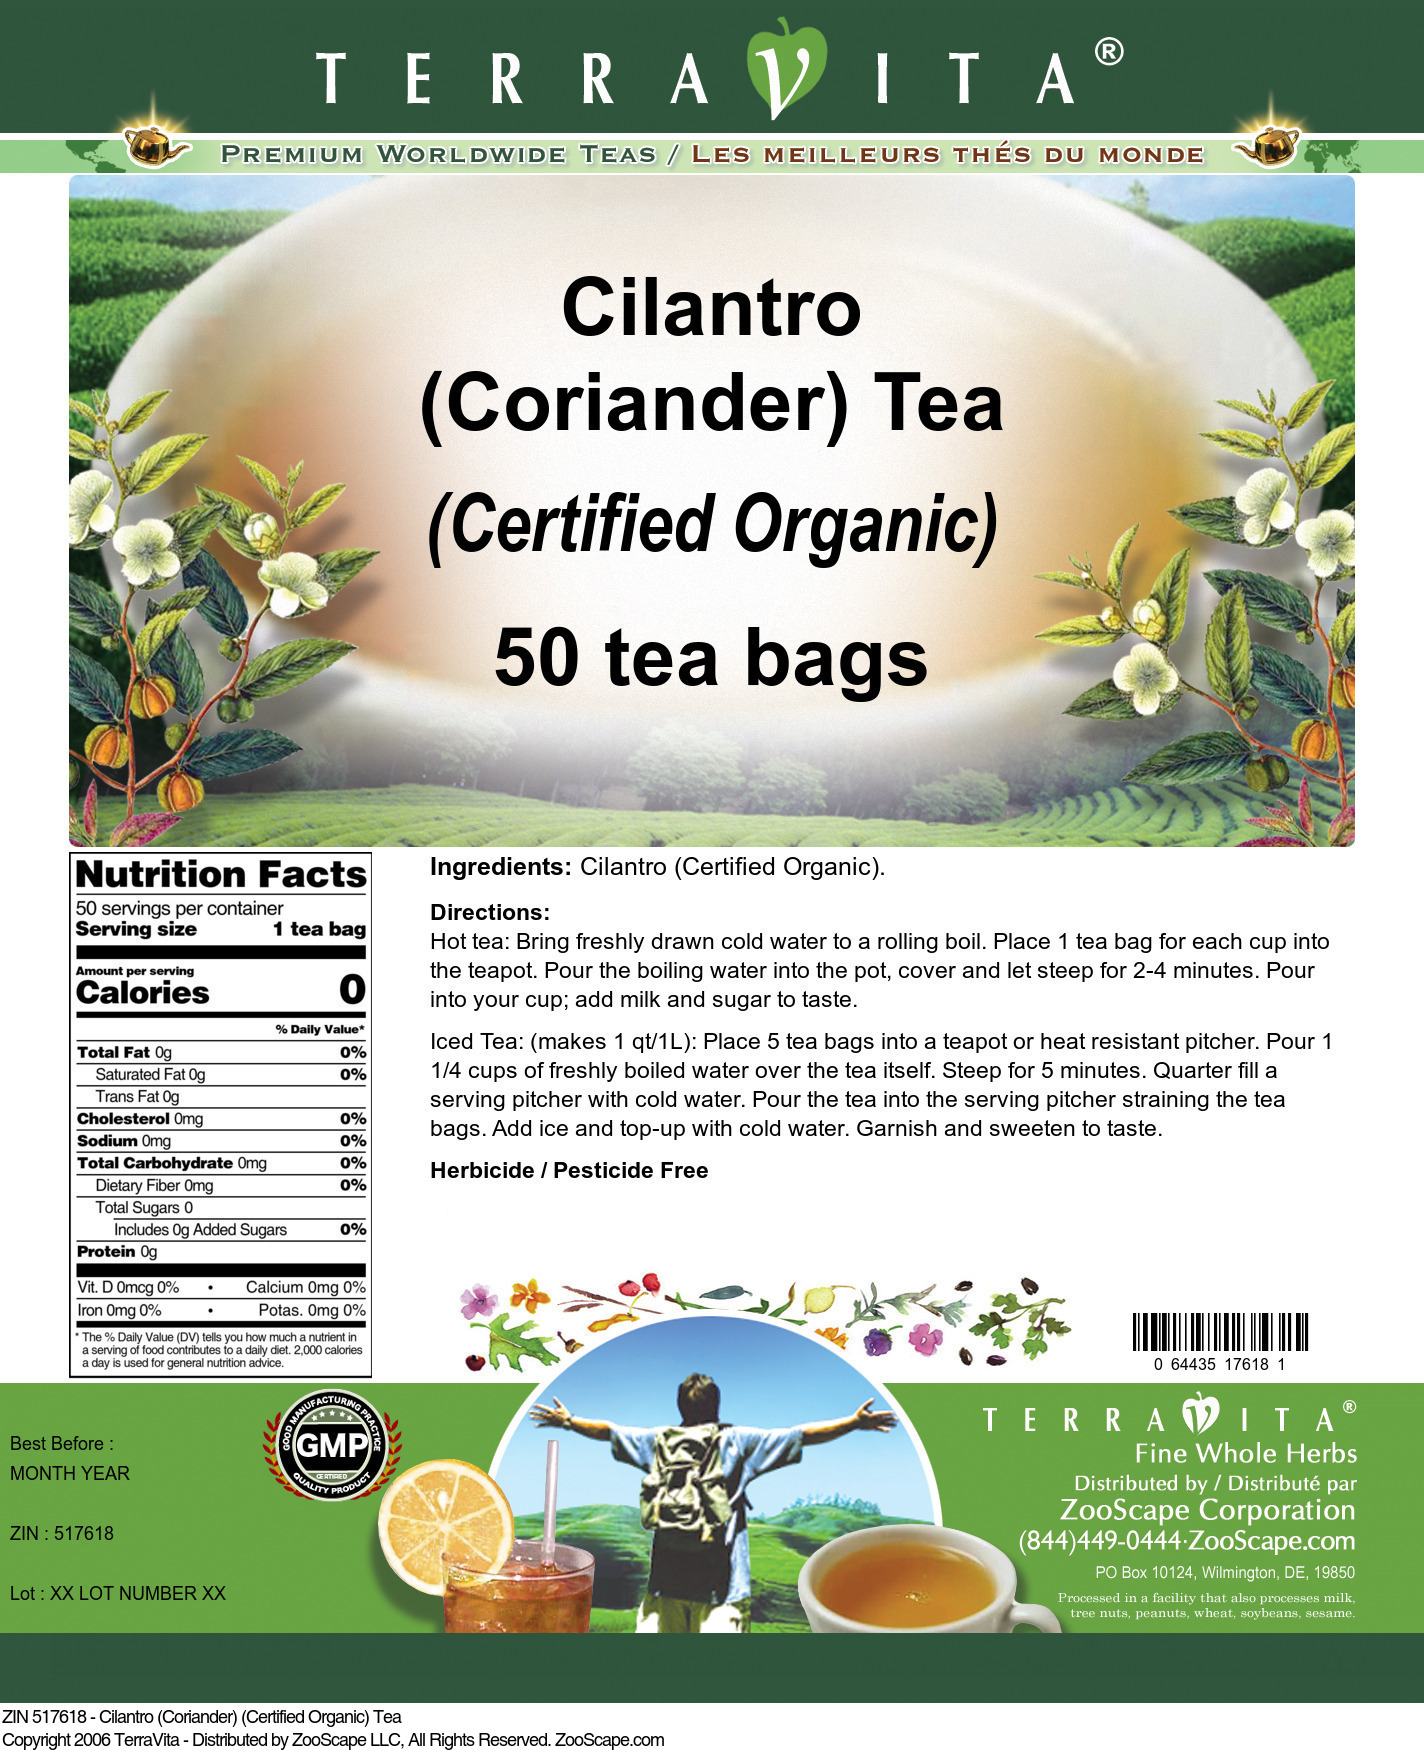 Cilantro (Coriander) (Certified Organic) Tea - Label